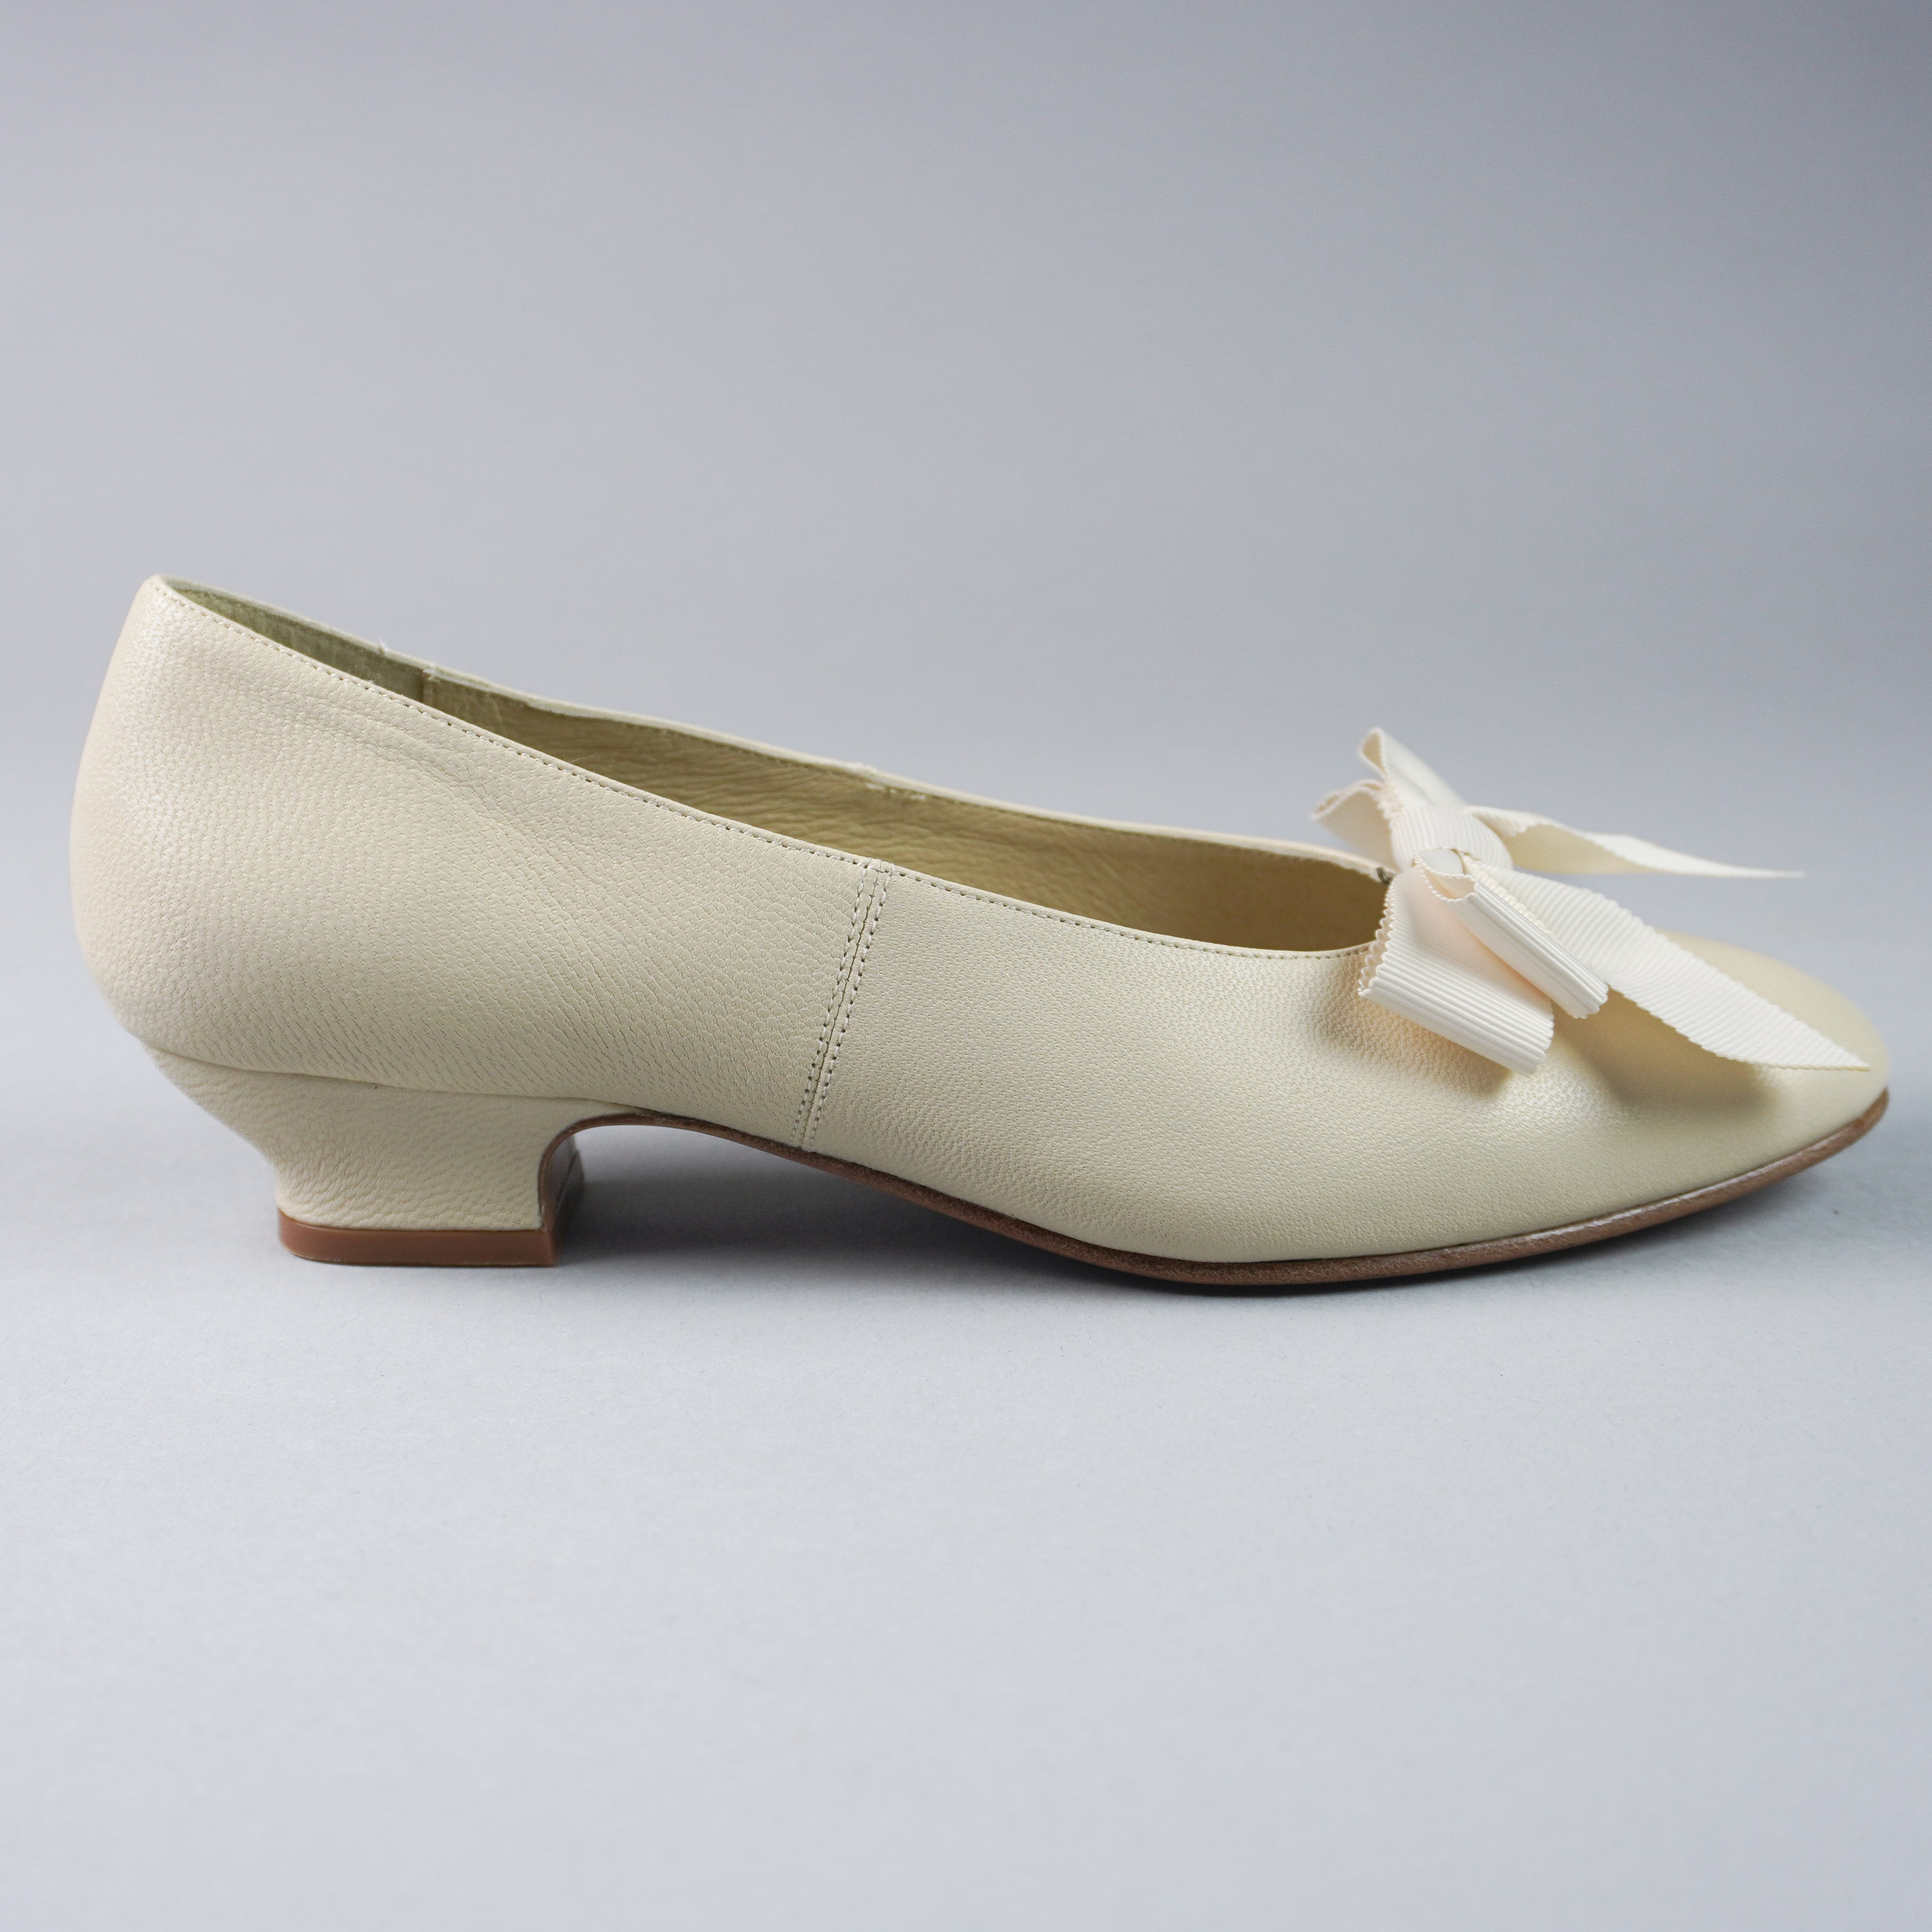 Vagabond LYKKE - Classic heels - cream/beige - Zalando.de